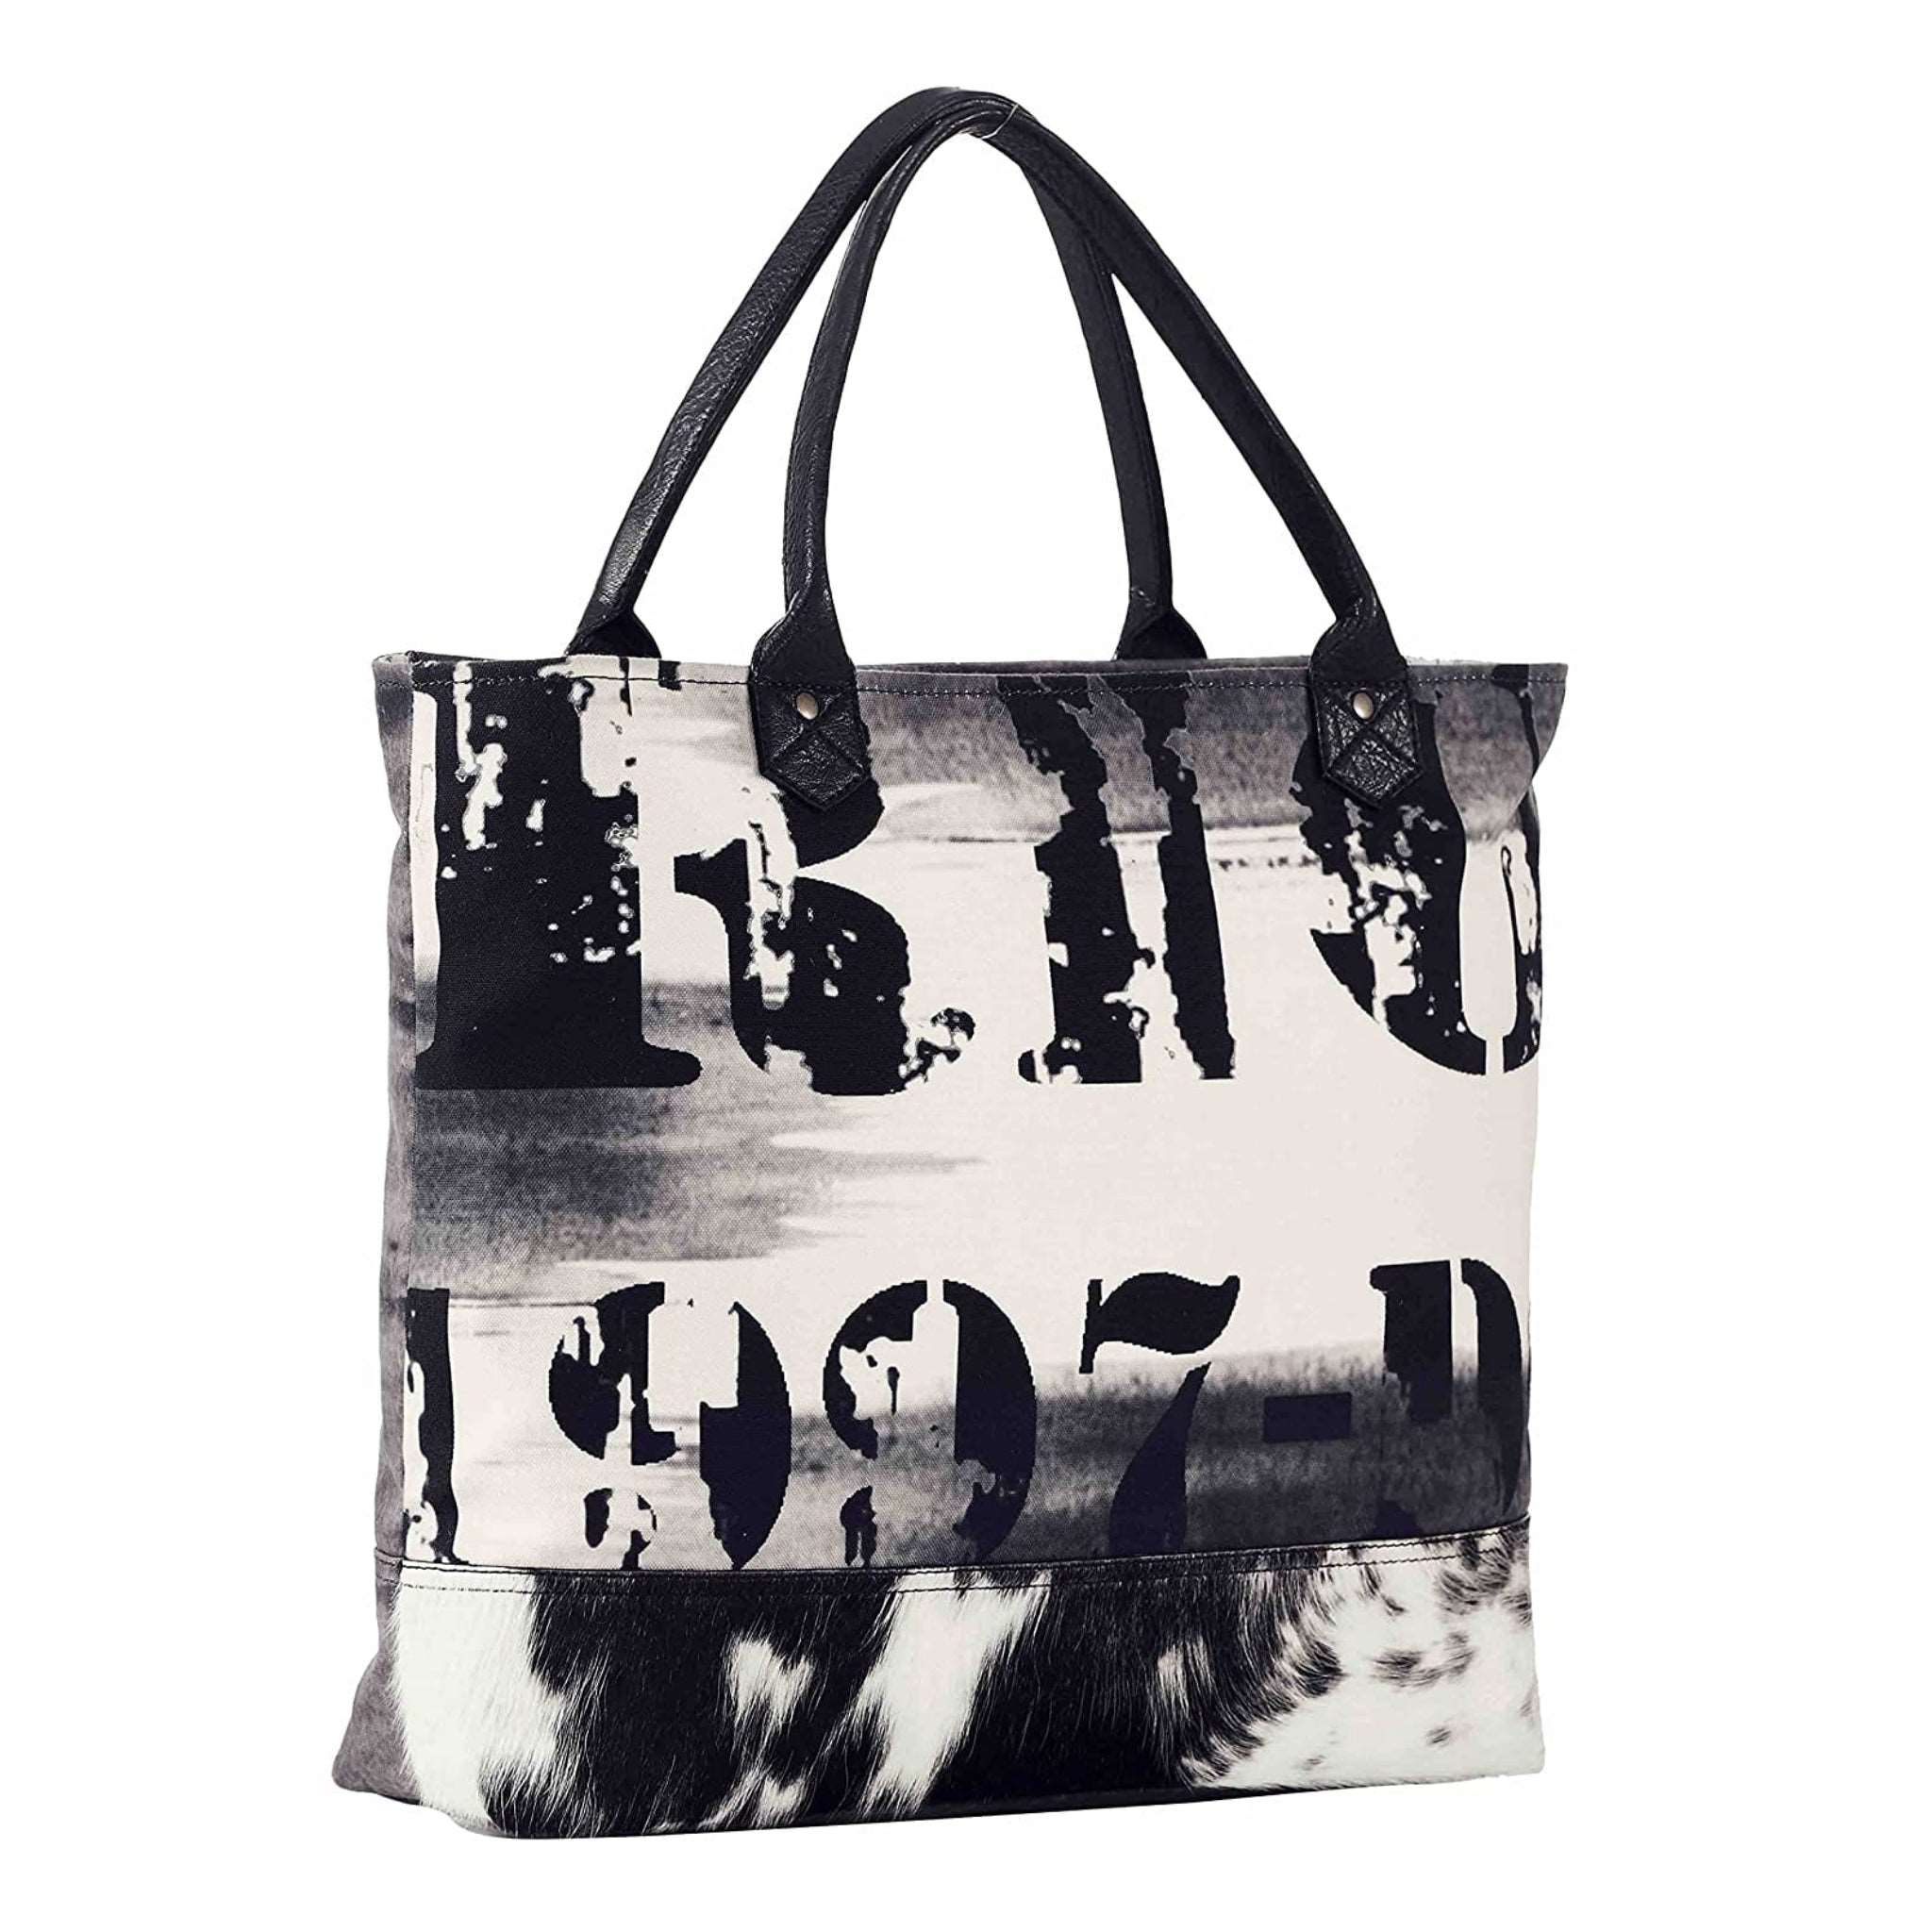 Mona B Beige Large Canvas Handbag for Women | Tote Bag for Grocery, Shopping, Travel | Stylish Vintage Shoulder Bags for Women